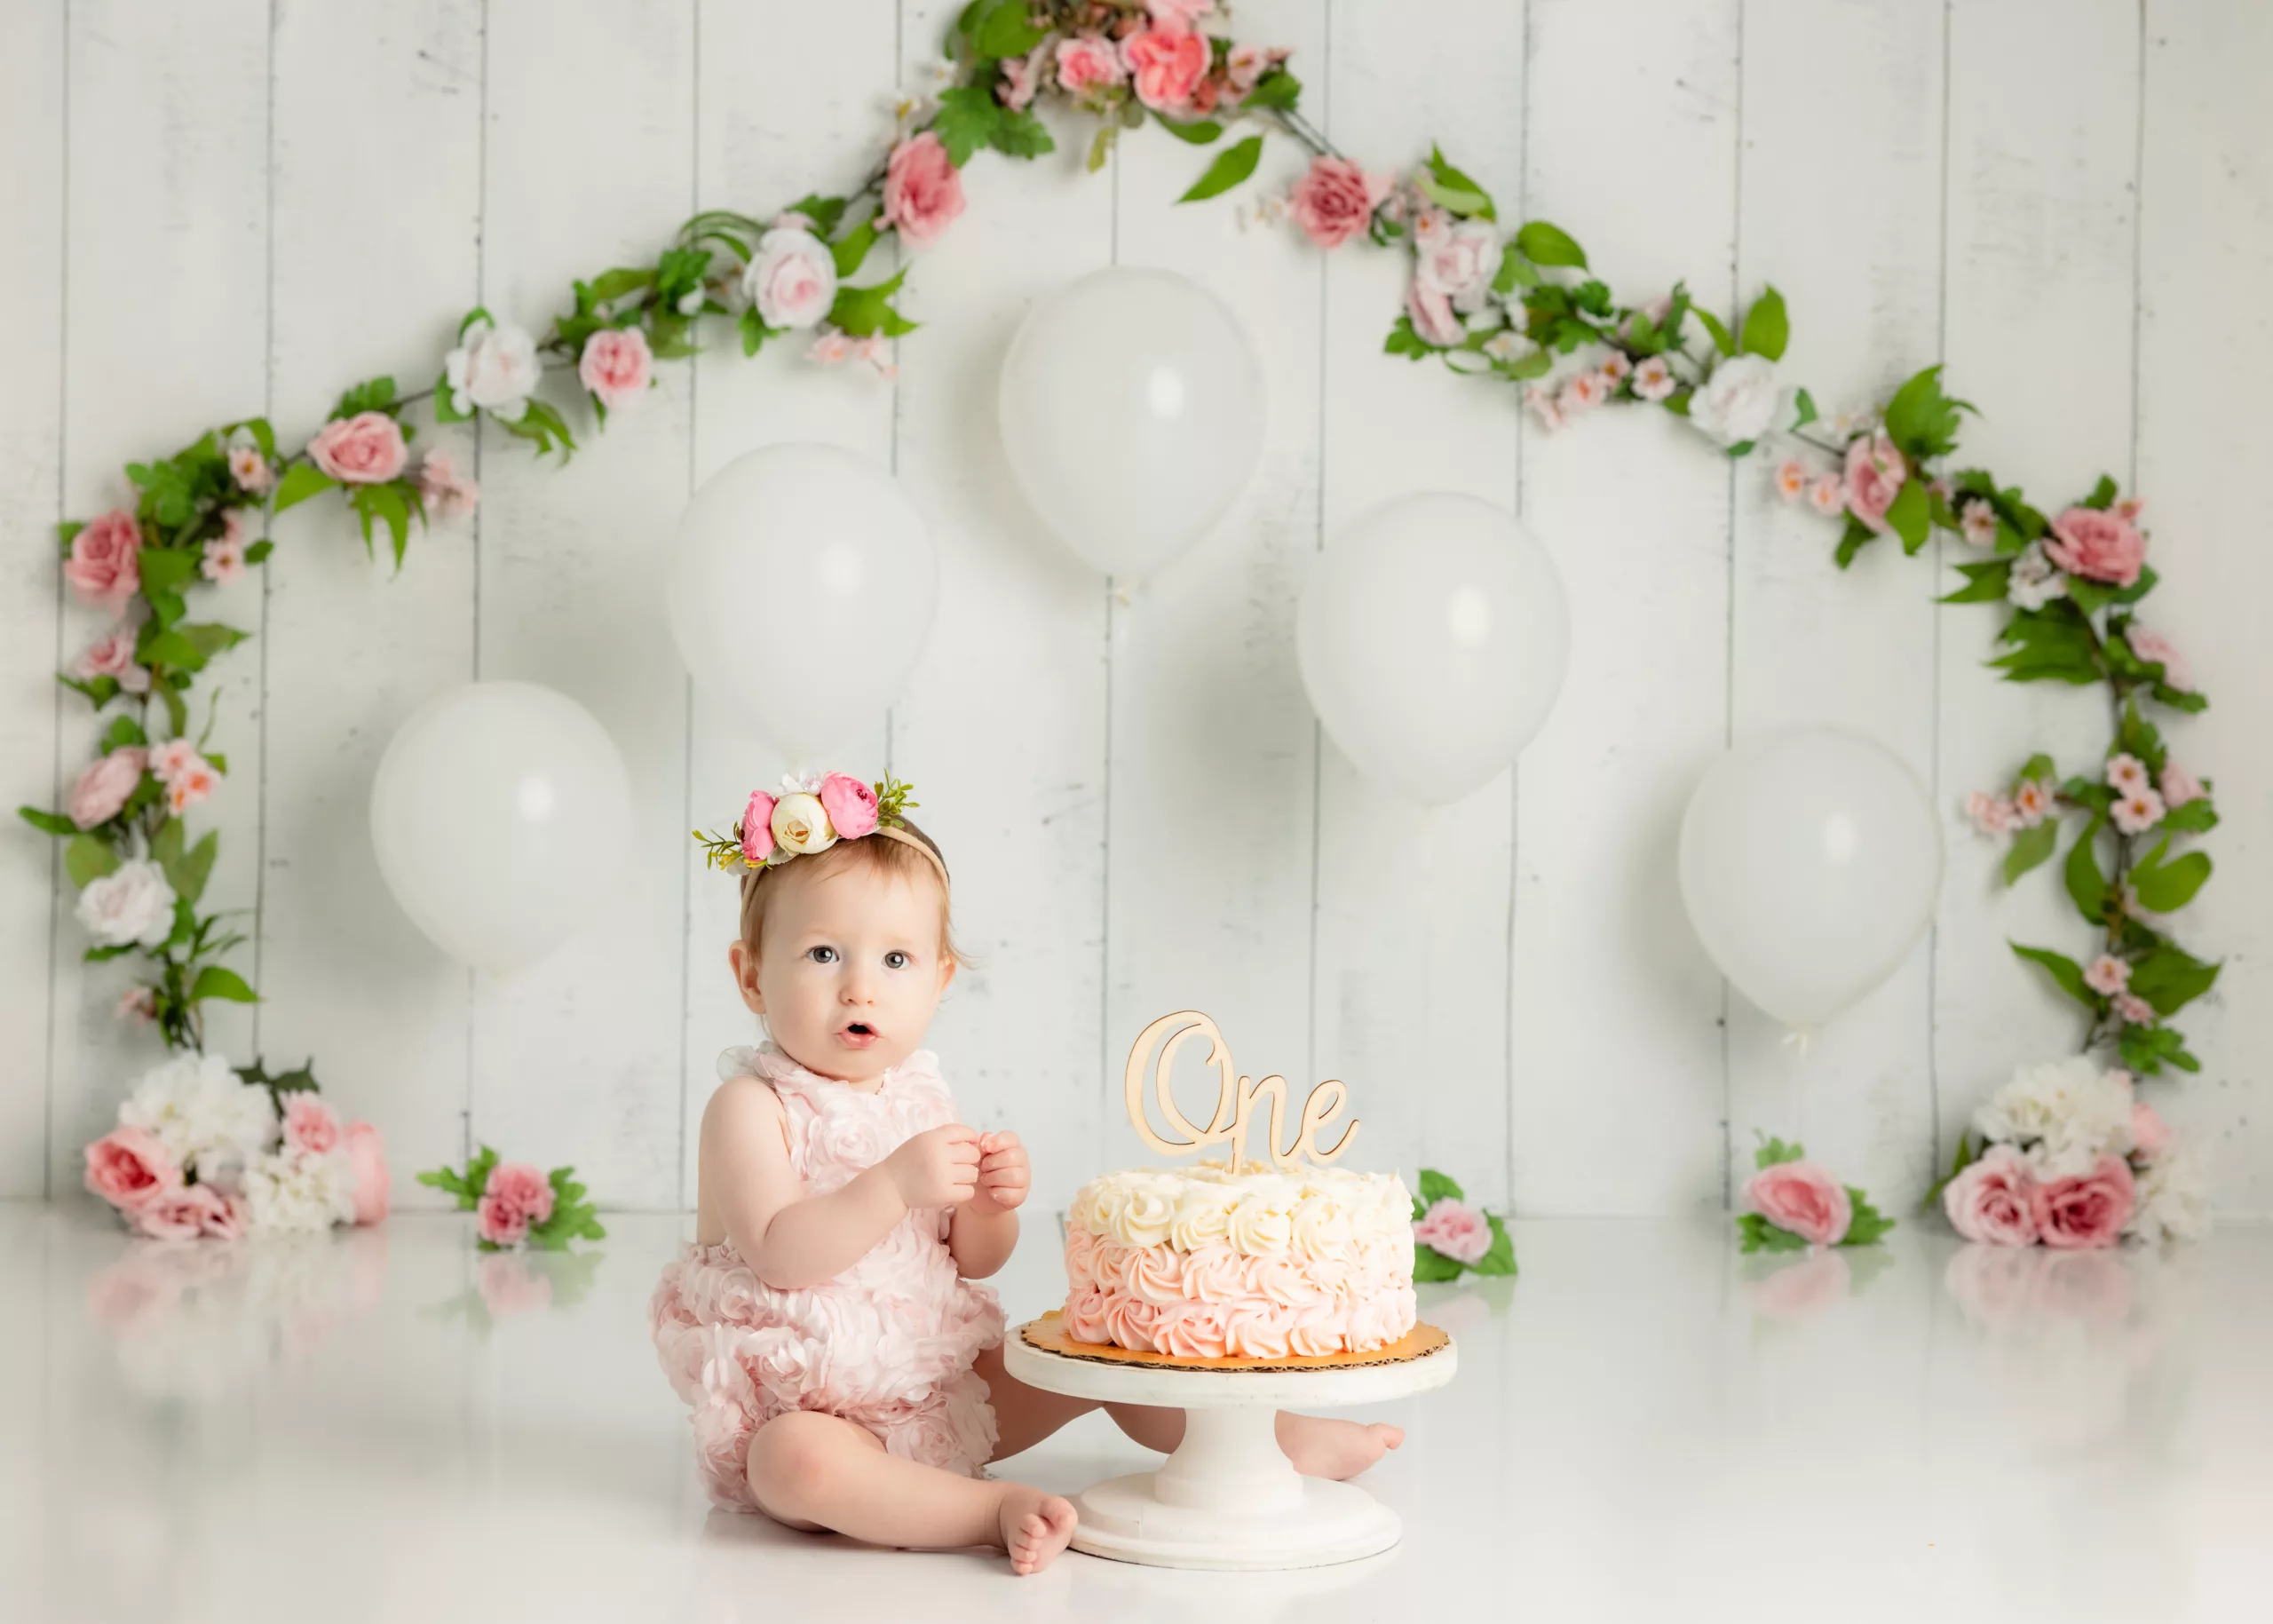 Orlando Girl Cake Smash 1st Birthday Photographer Photo Studio white pallet wood flower cake pink flowers white balloons